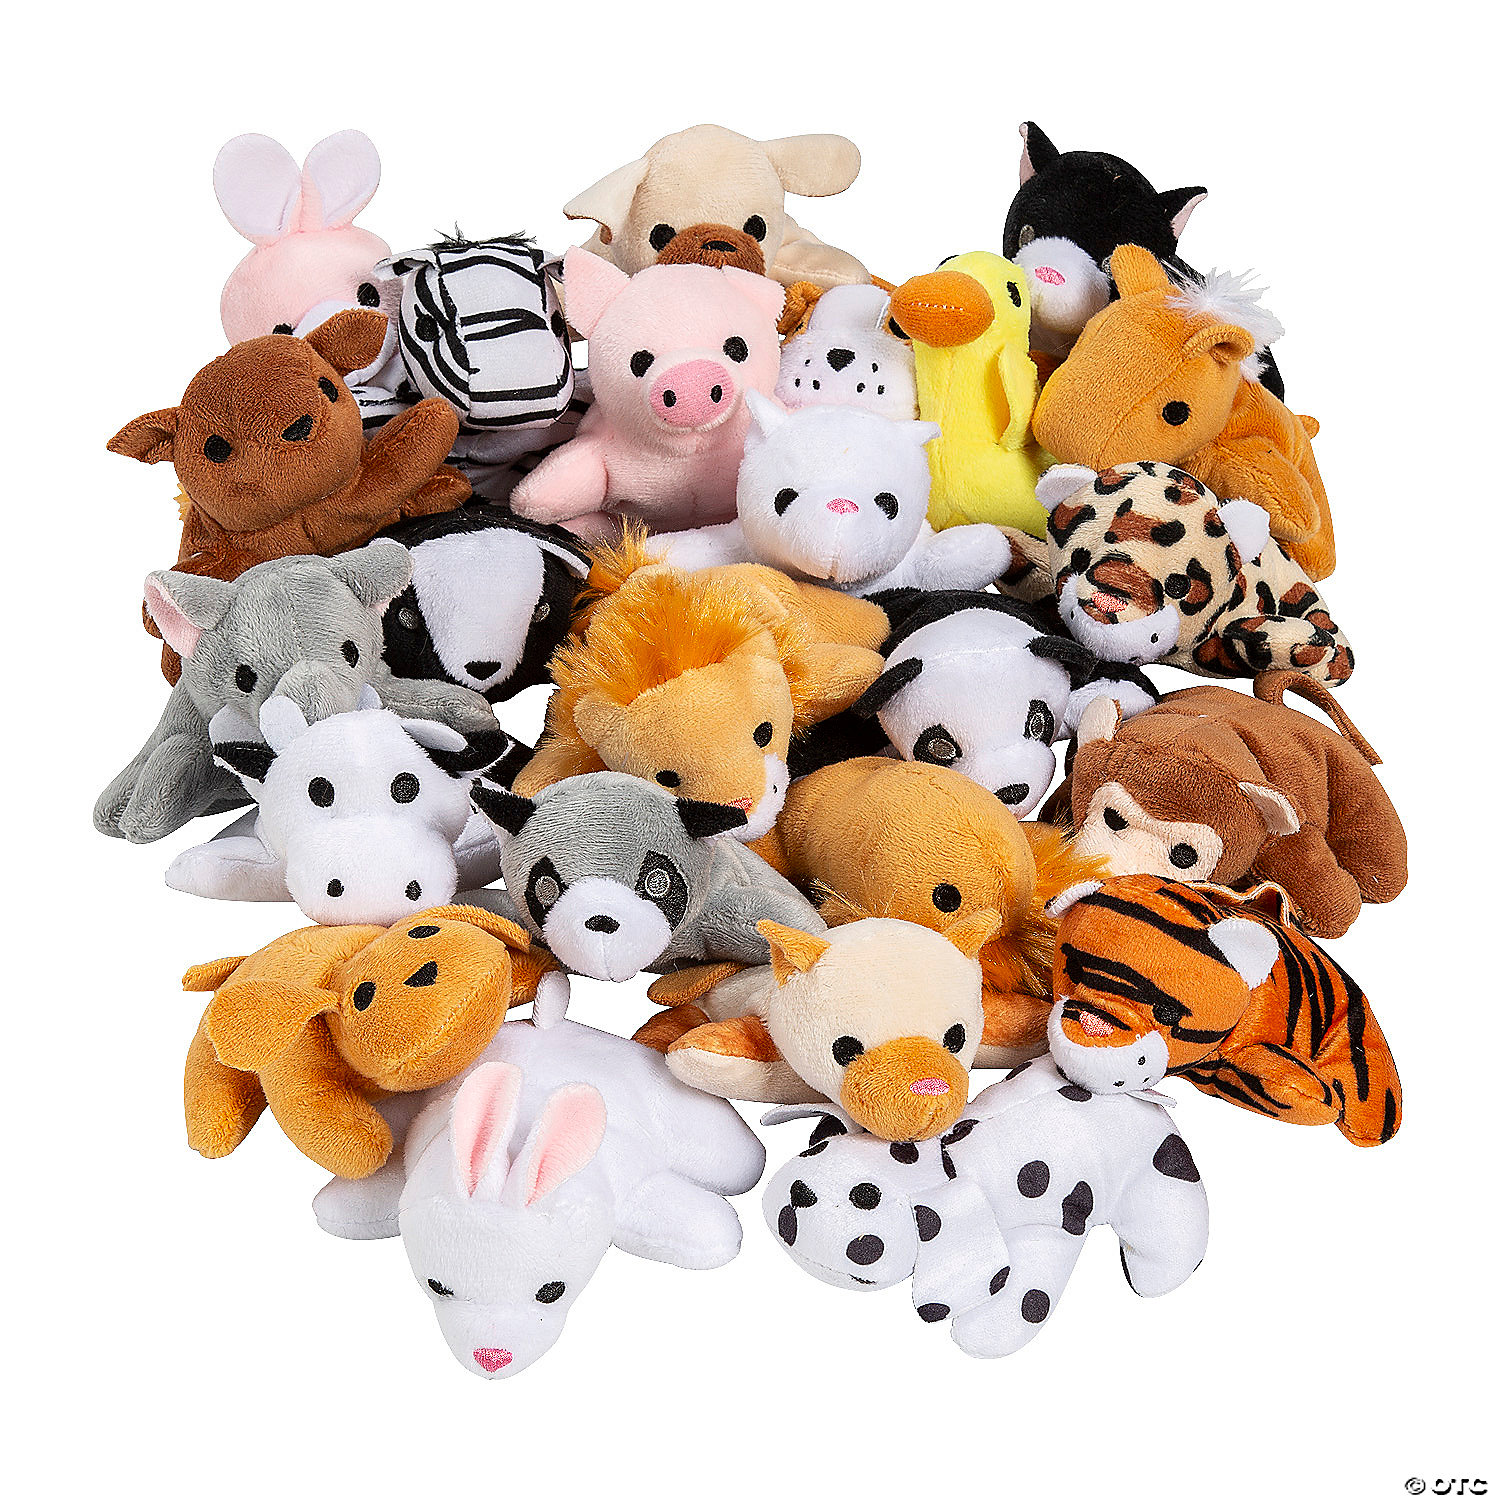 buy stuffed animals in bulk